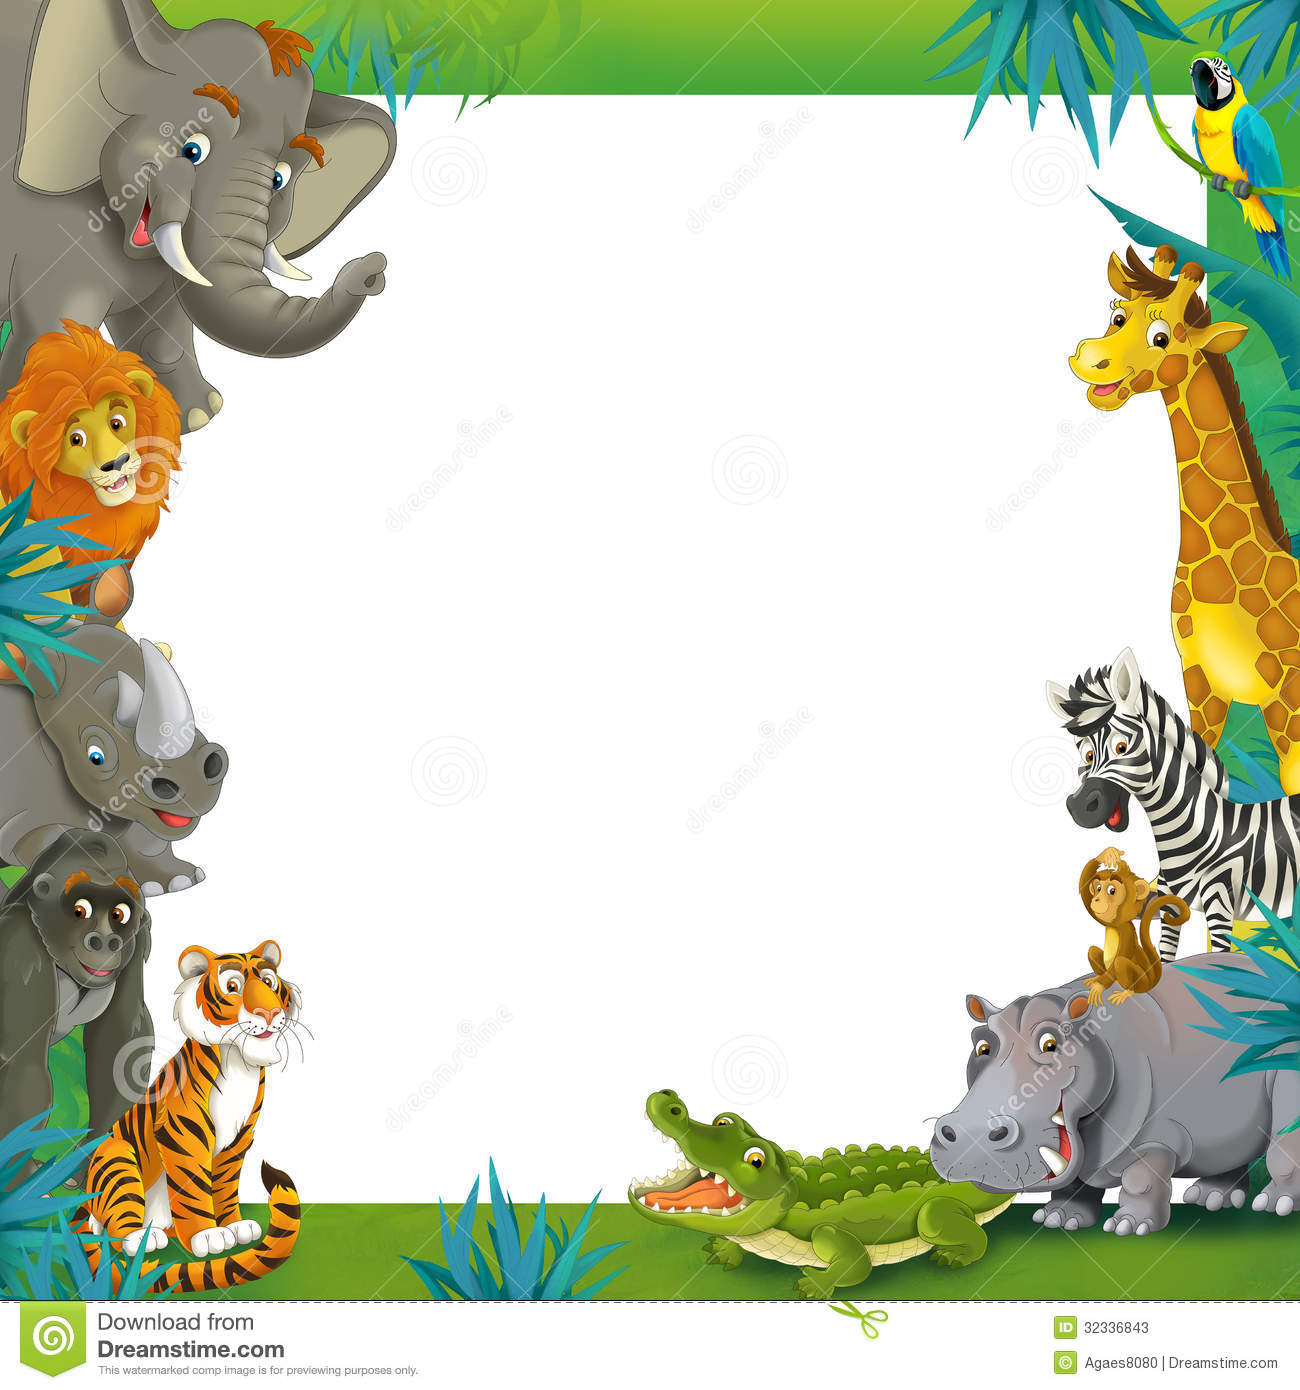 Cartoon Safari   Jungle   Frame Border Template   Illustration For